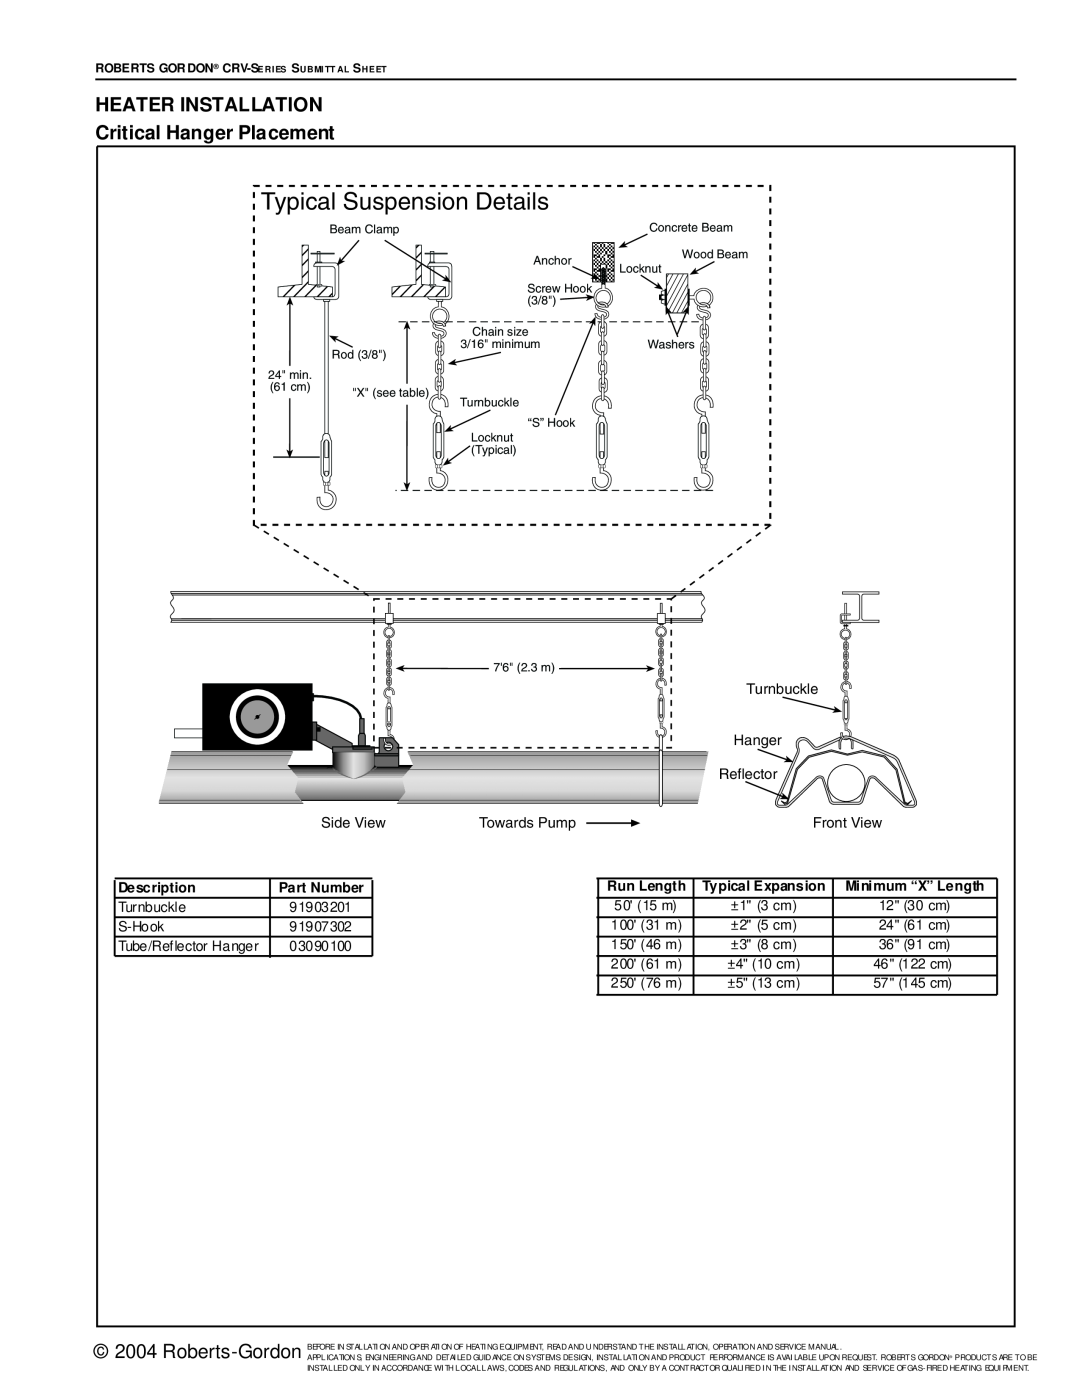 Roberts Gorden CRV-Series Typical Suspension Details, HEATER INSTALLATION Critical Hanger Placement, Description 